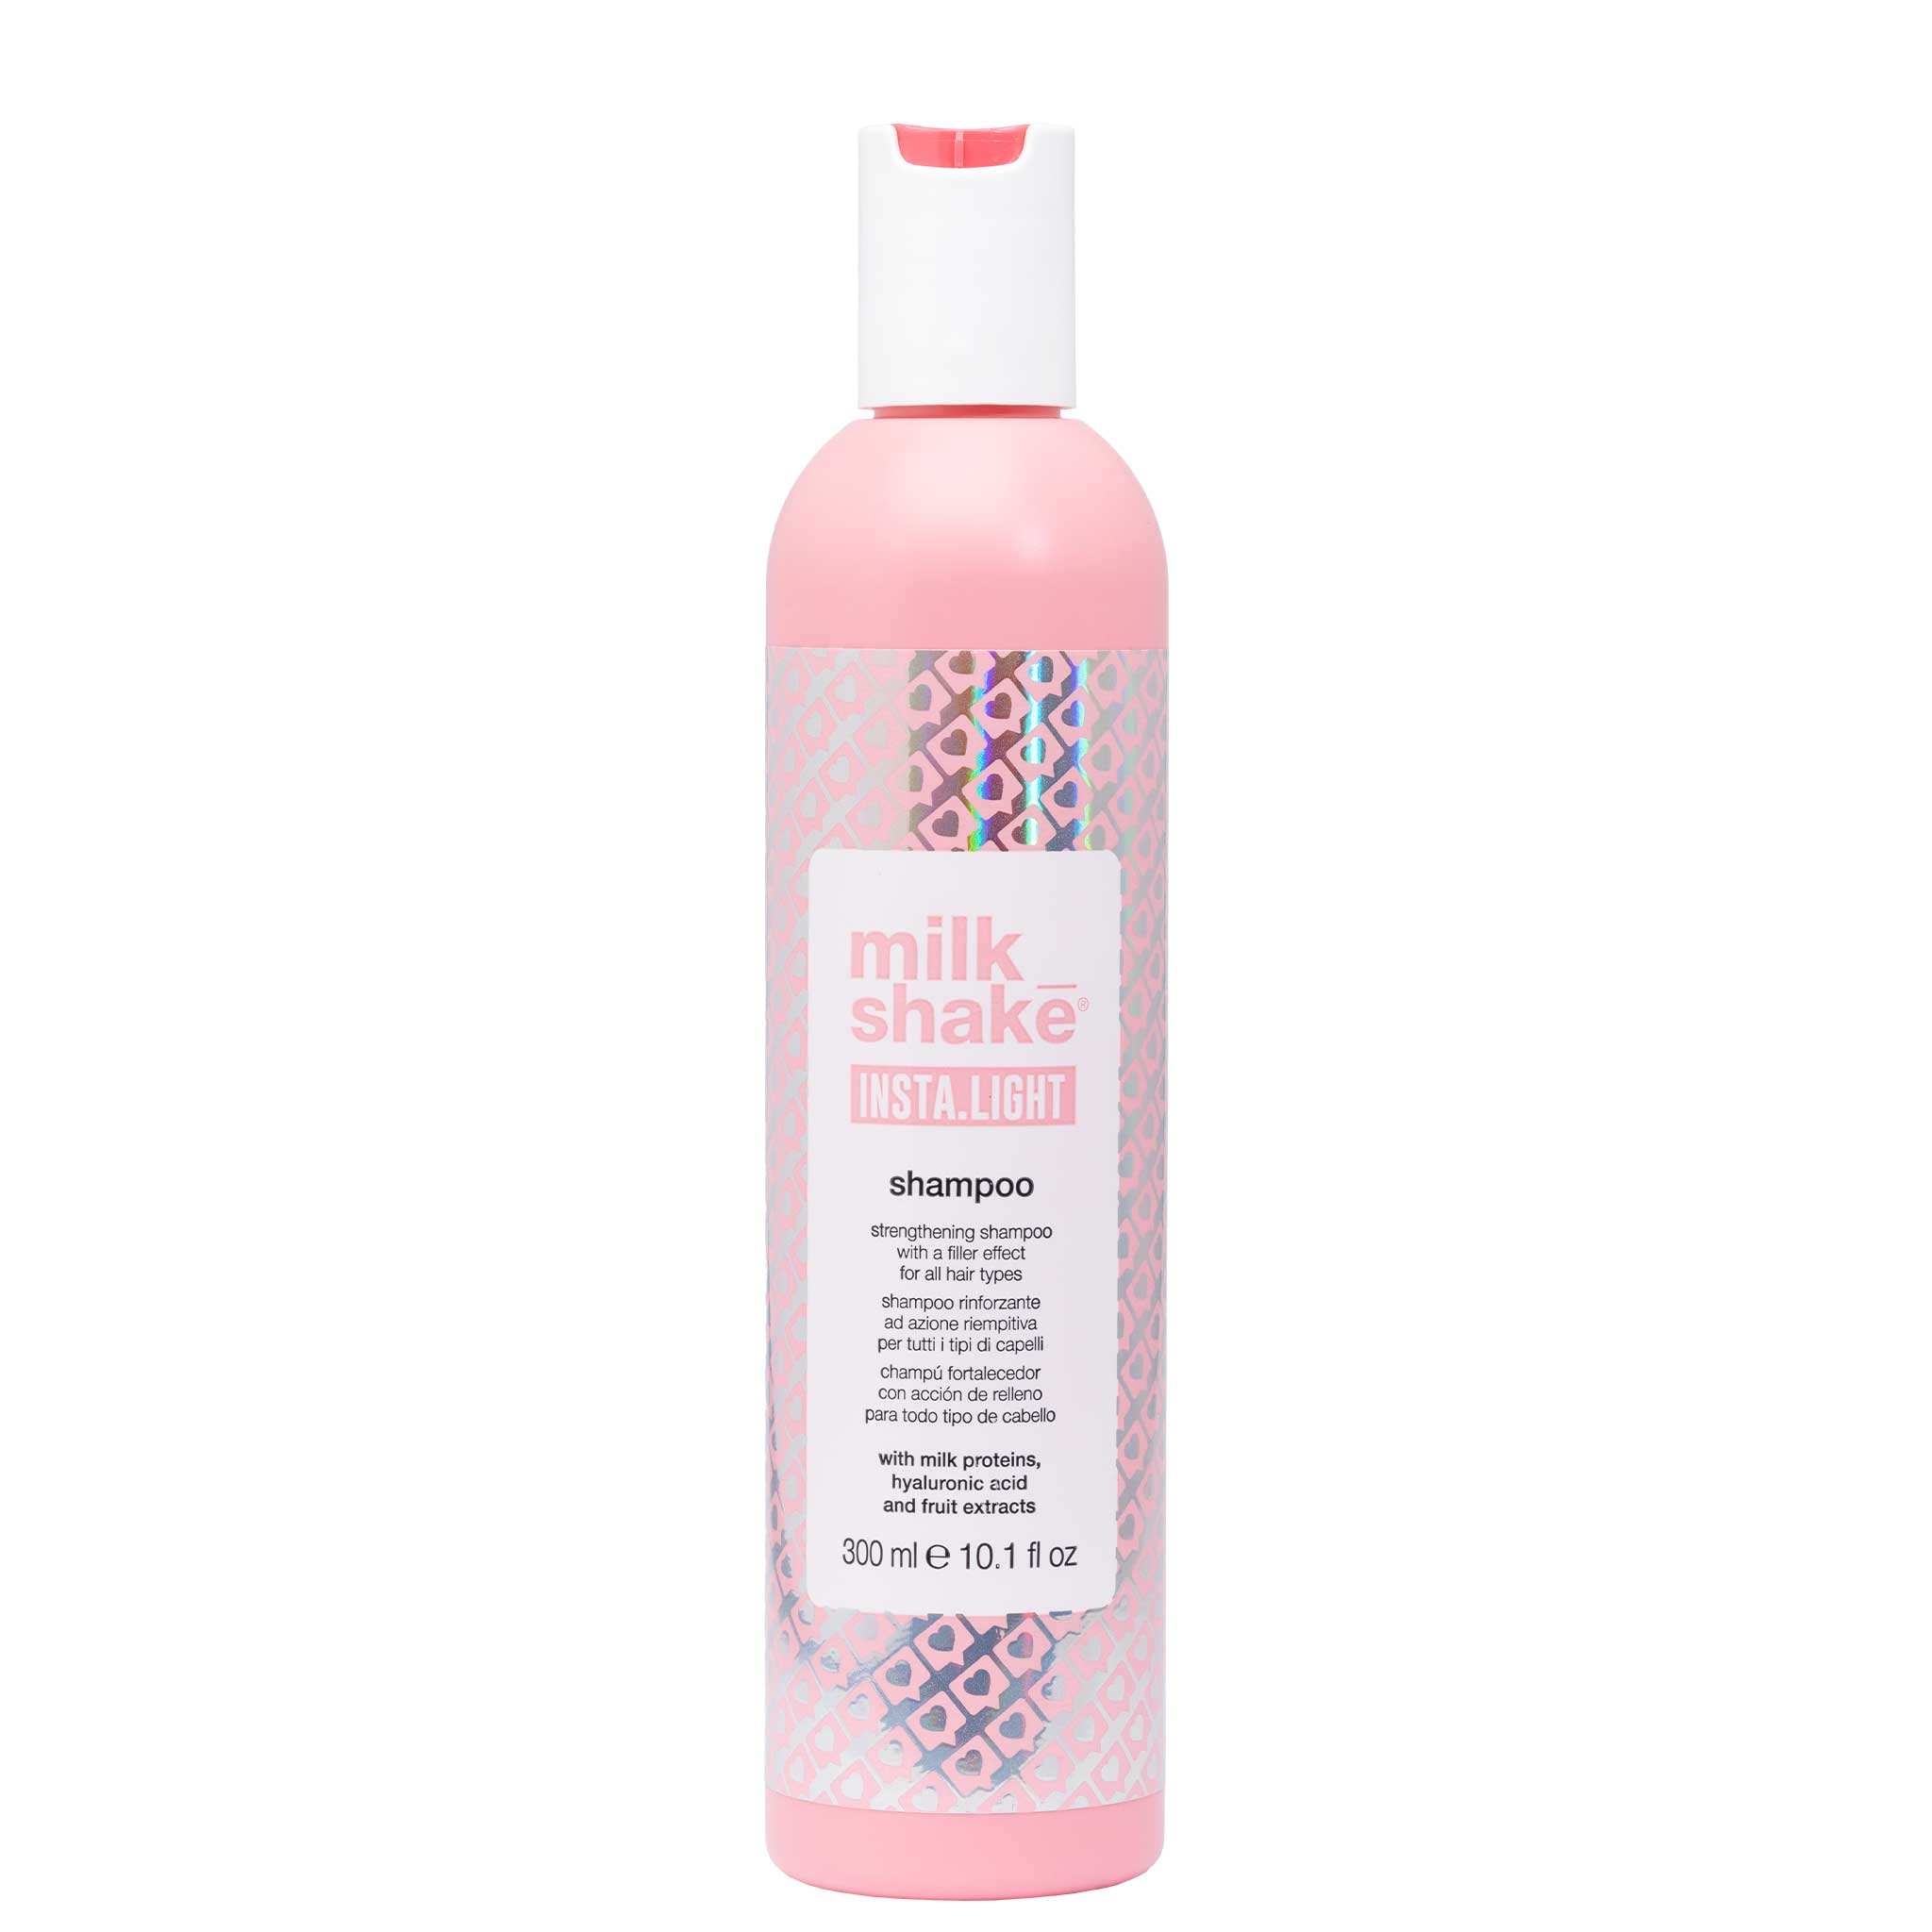 milk_shake insta.light shampoo, milk_shake